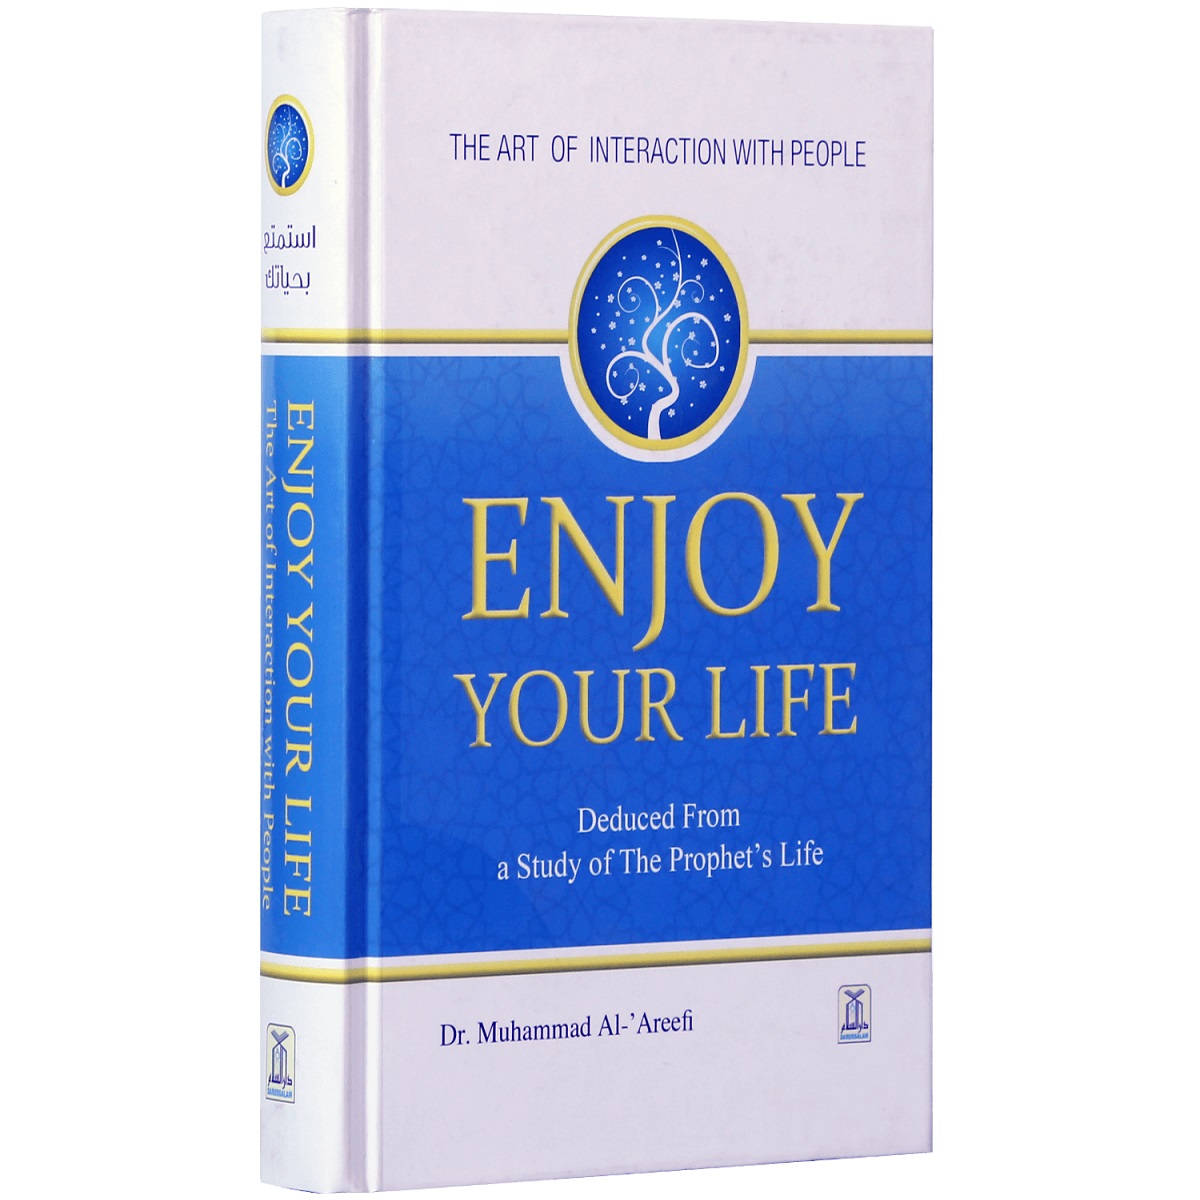 Enjoy Your Life by Dr Muhammad Al Areefi (Darussalam)